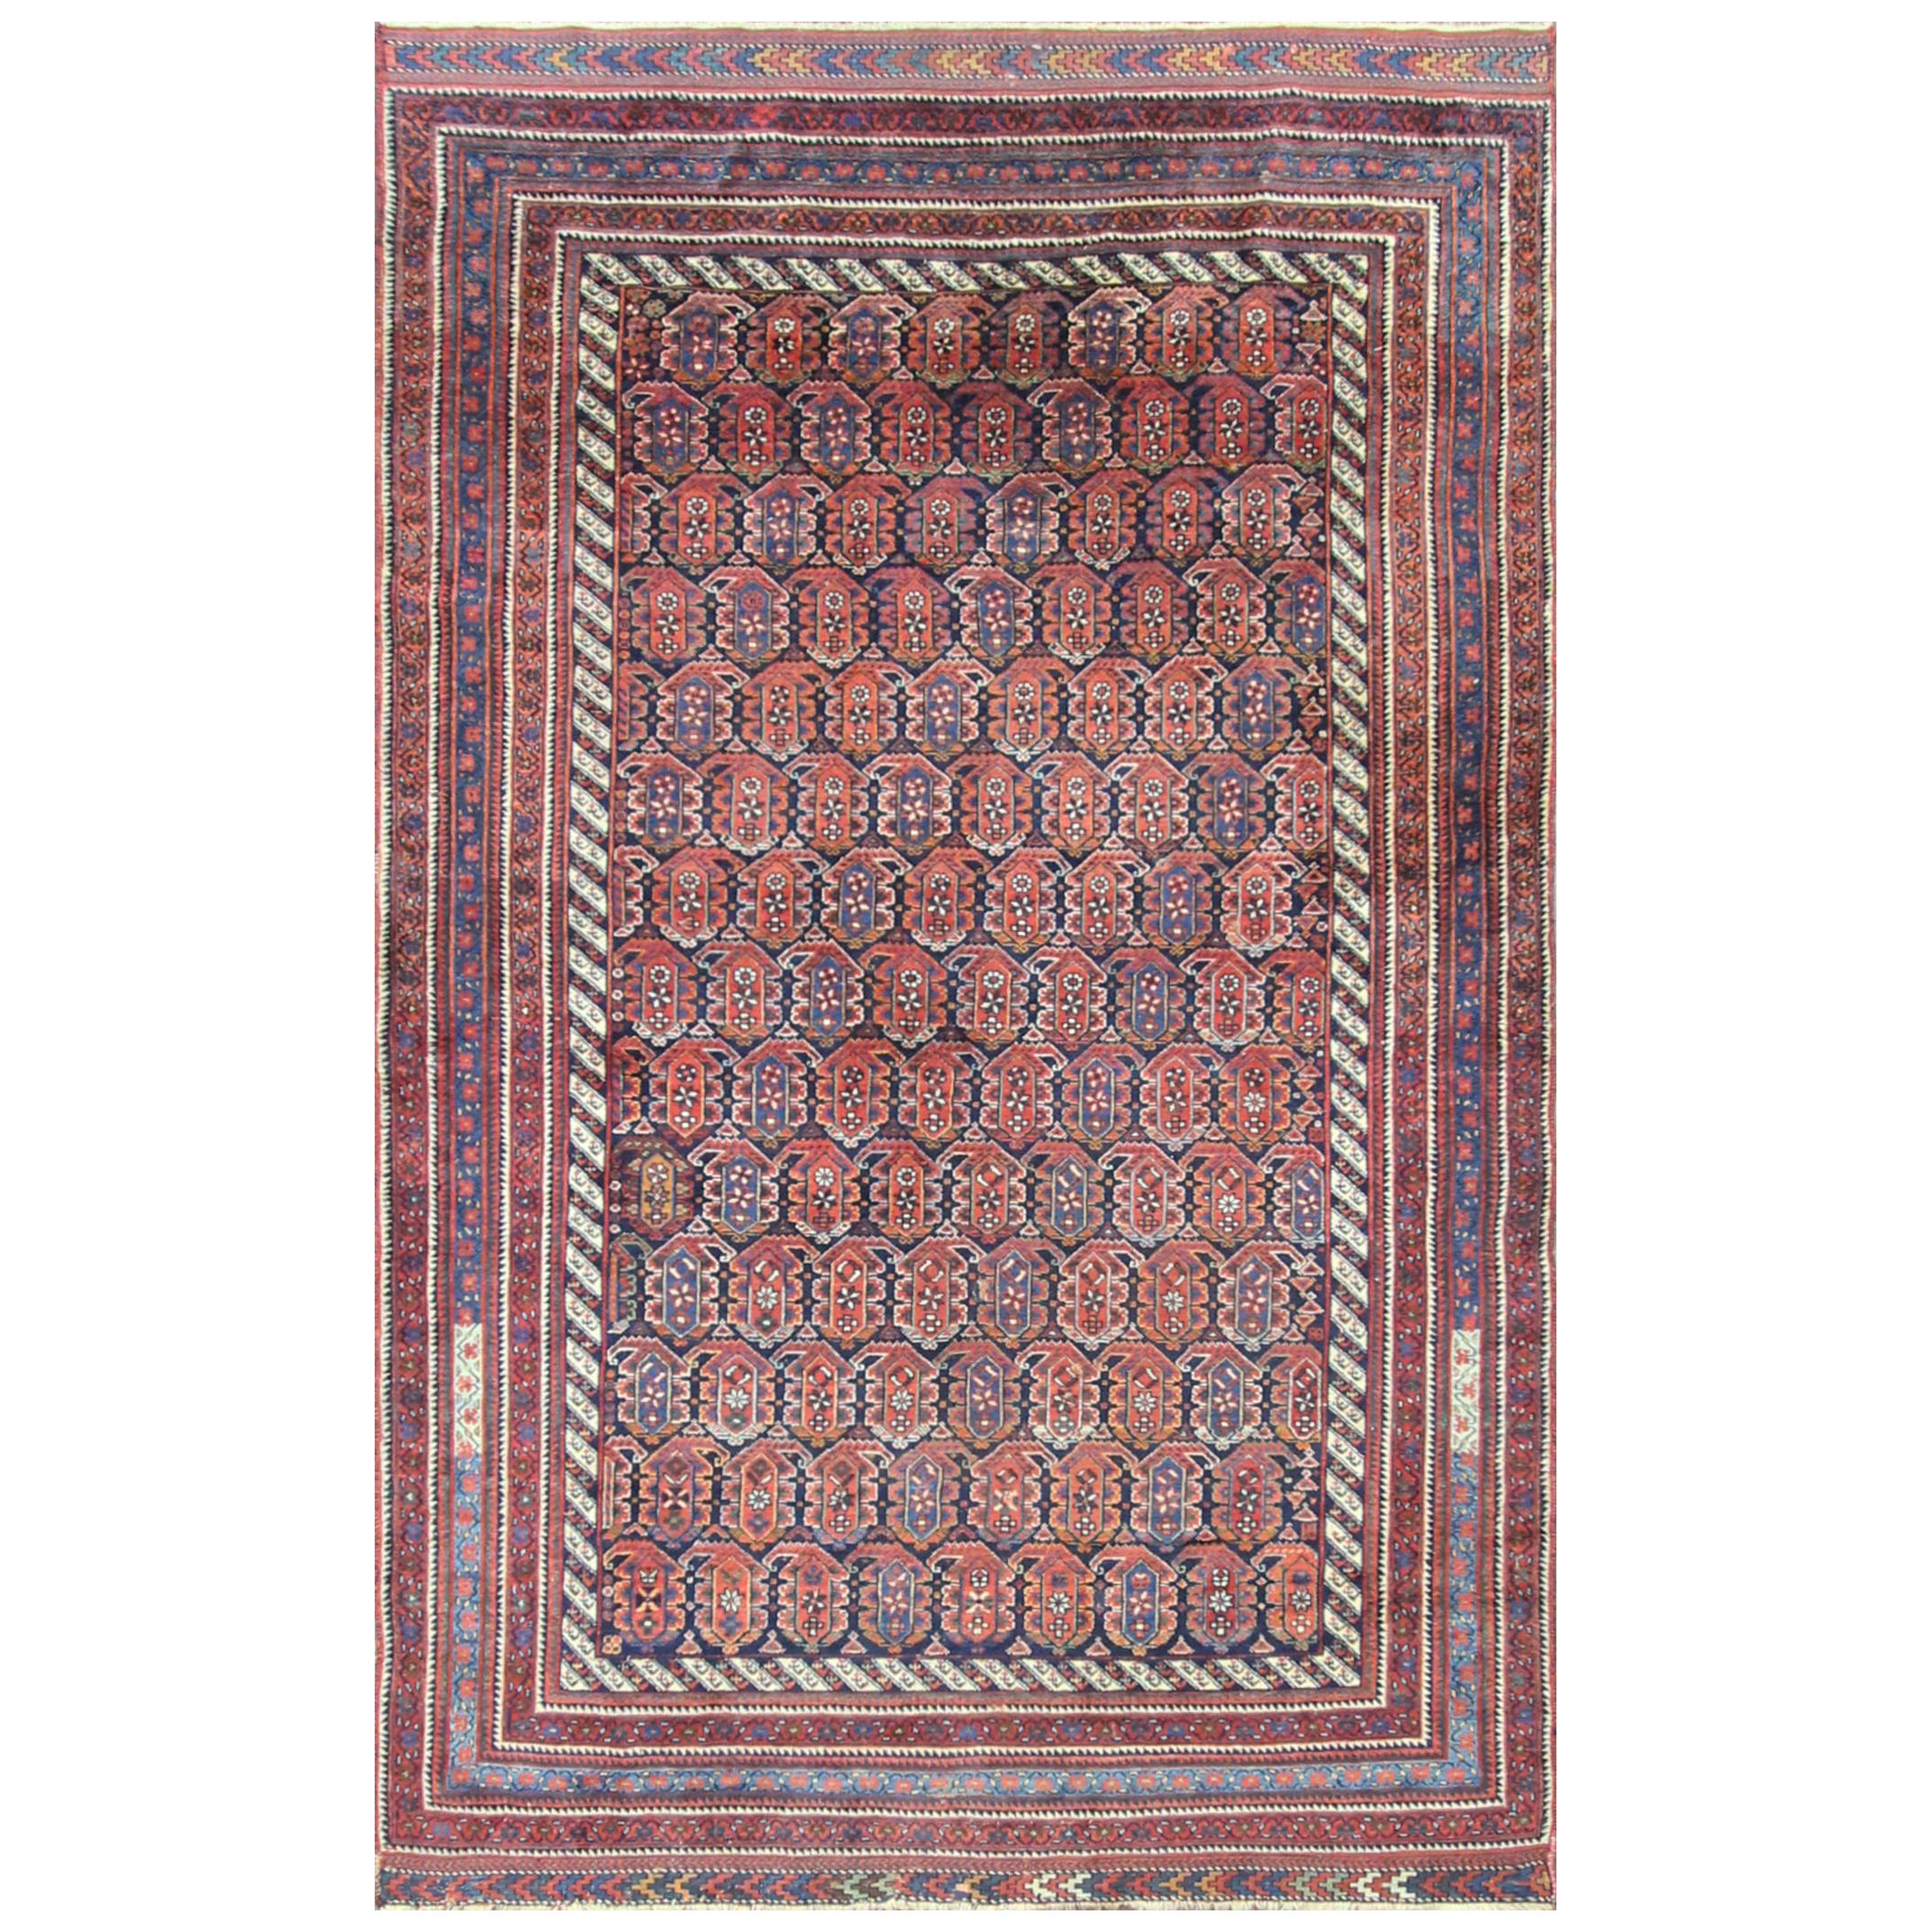 Antique Persian Afshar Carpet, Magnificent, Tribal, 5'8" x 9'5" For Sale